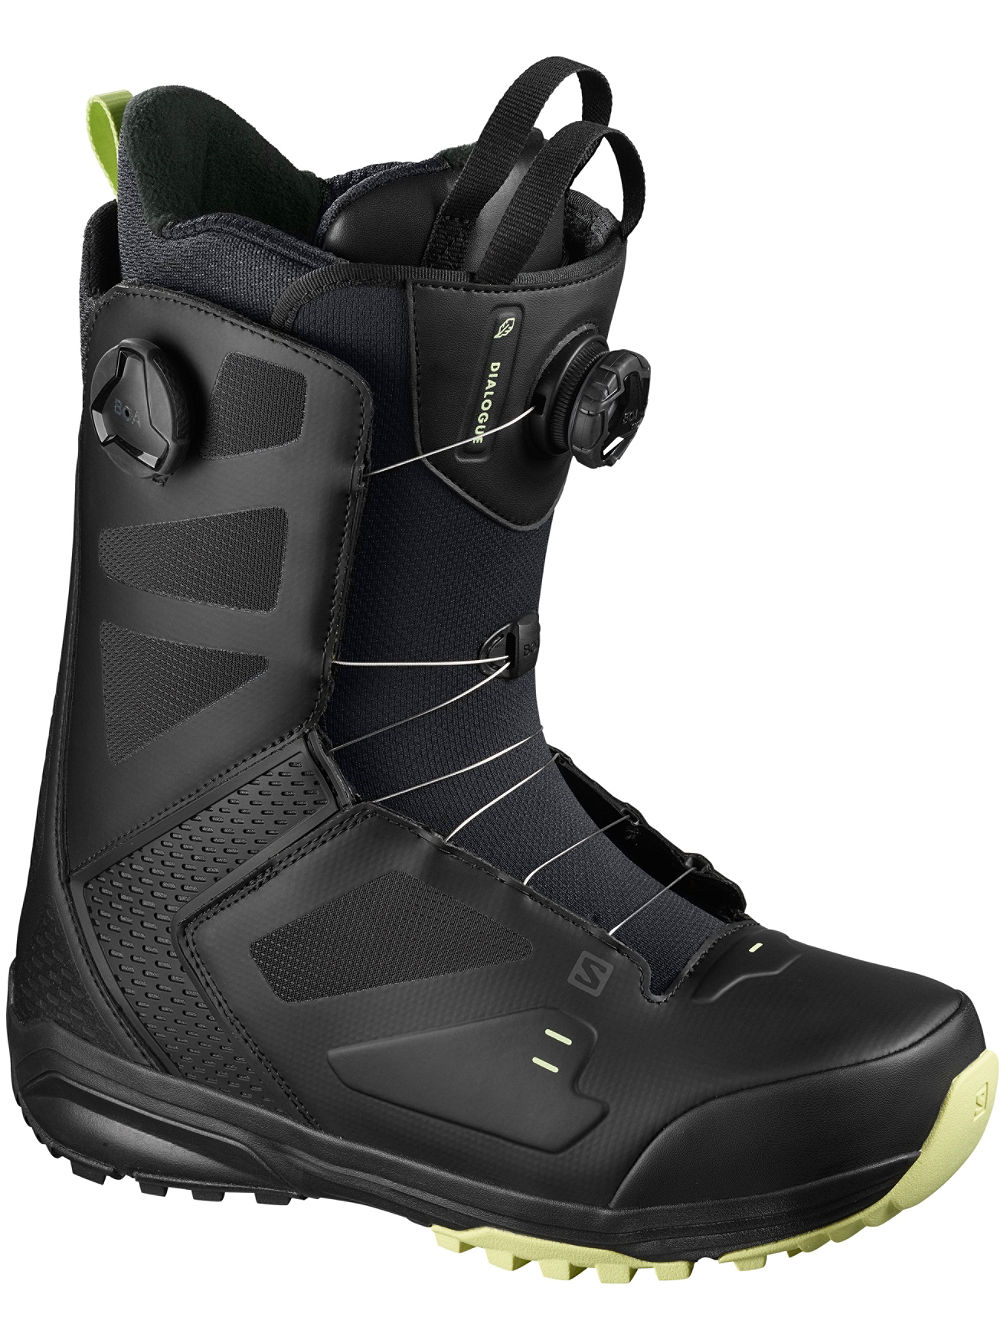 Dialogue Dual Boa Snowboard-Boots 2021